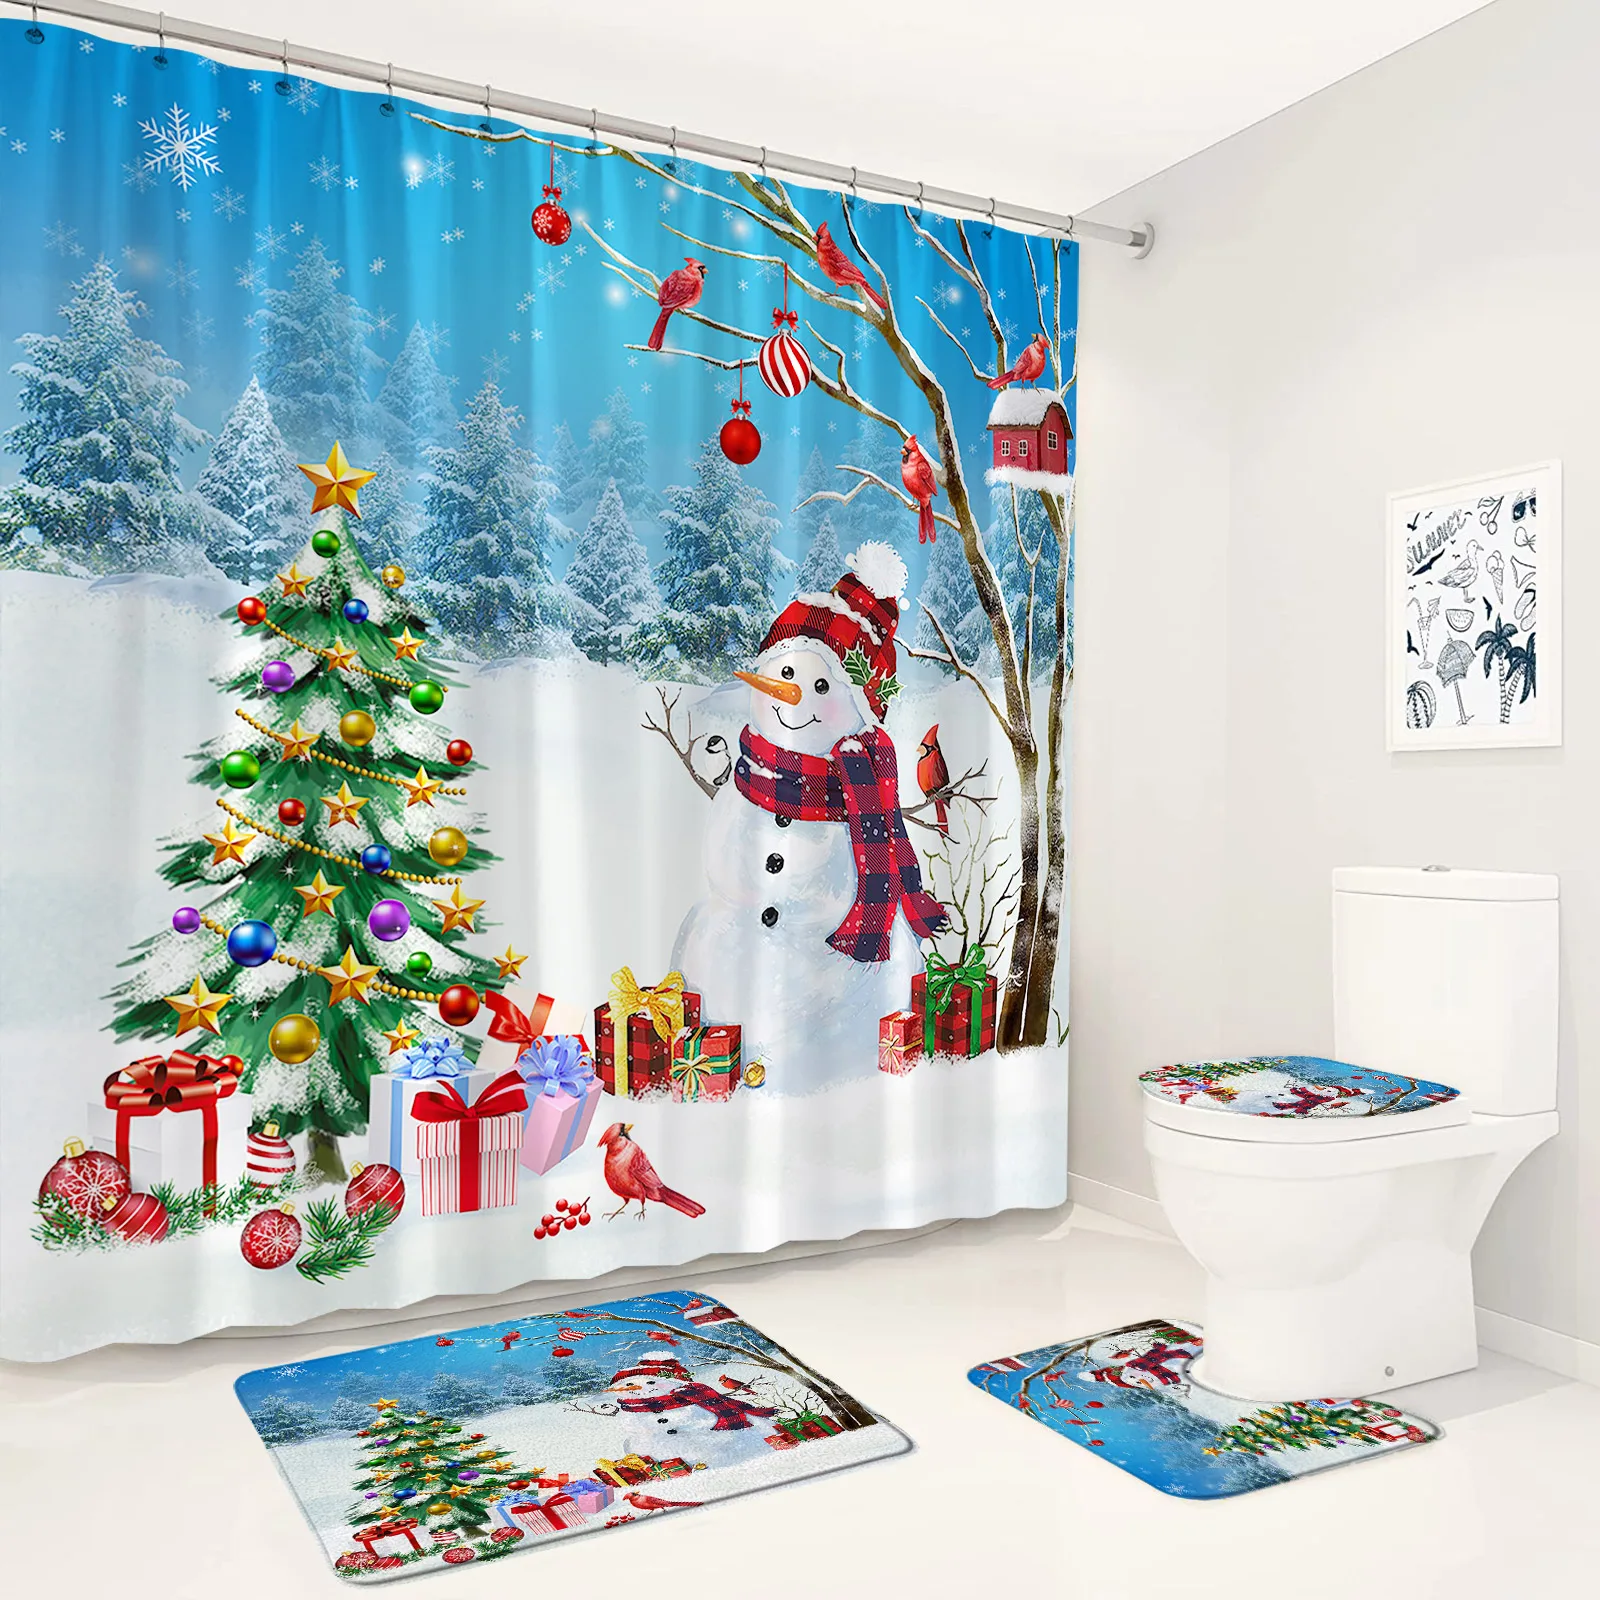 

Christmas Shower Curtain Bath Mats Set Xmas Tree Gift Red Bird Snowman Winter Forest Scenery Bathroom Decor Rug Toilet Lid Cover